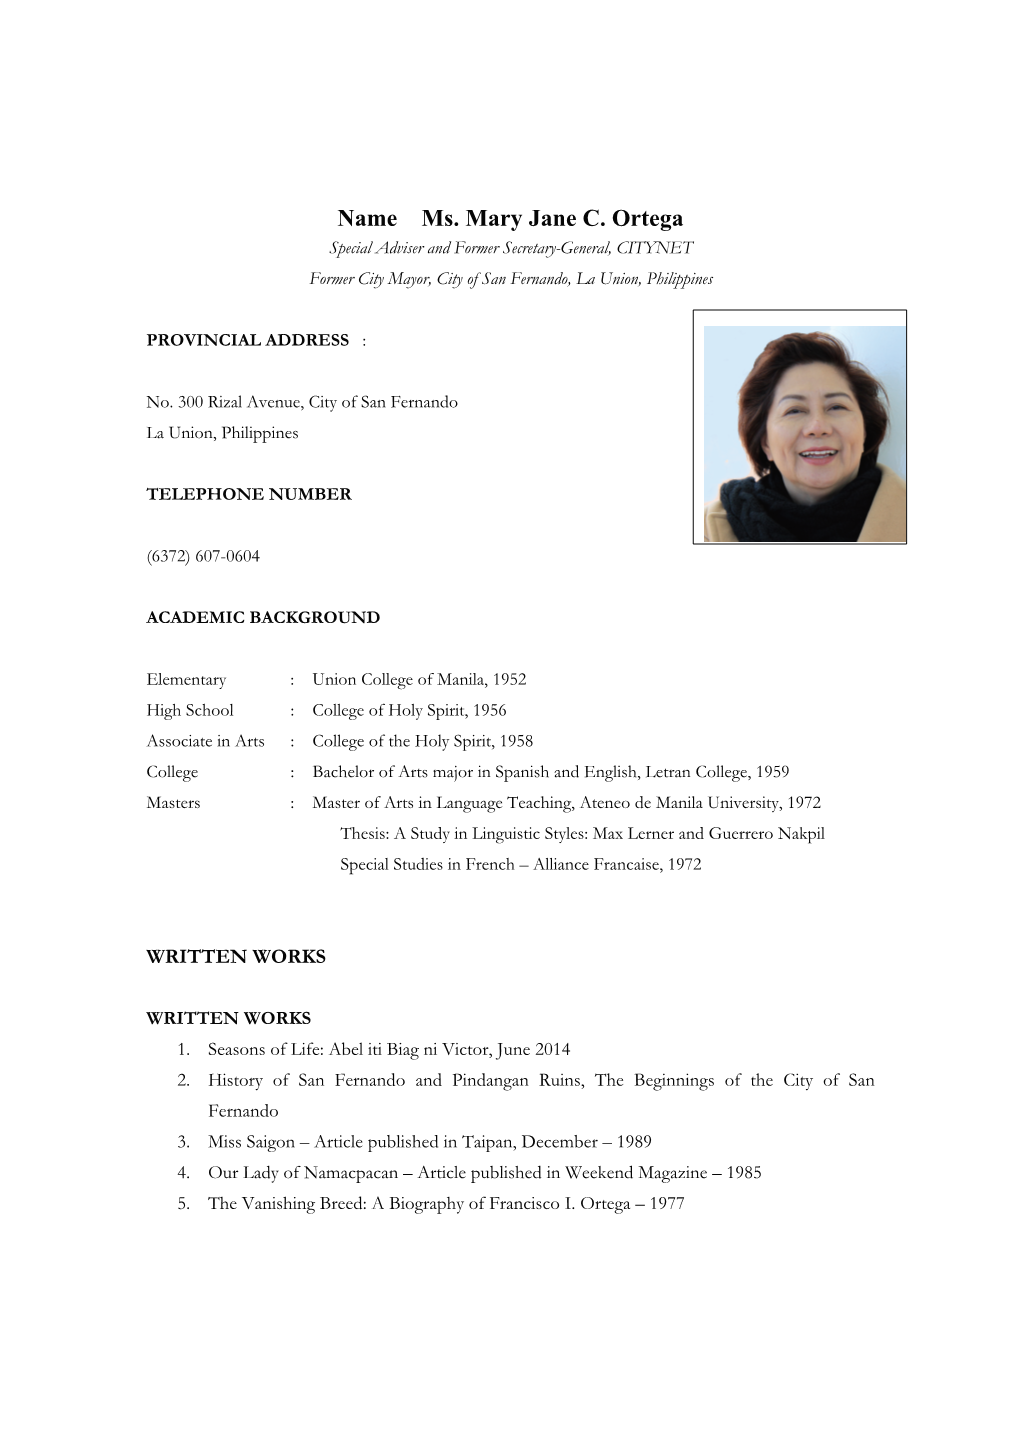 Name Ms. Mary Jane C. Ortega Special Adviser and Former Secretary-General, CITYNET Former City Mayor, City of San Fernando, La Union, Philippines